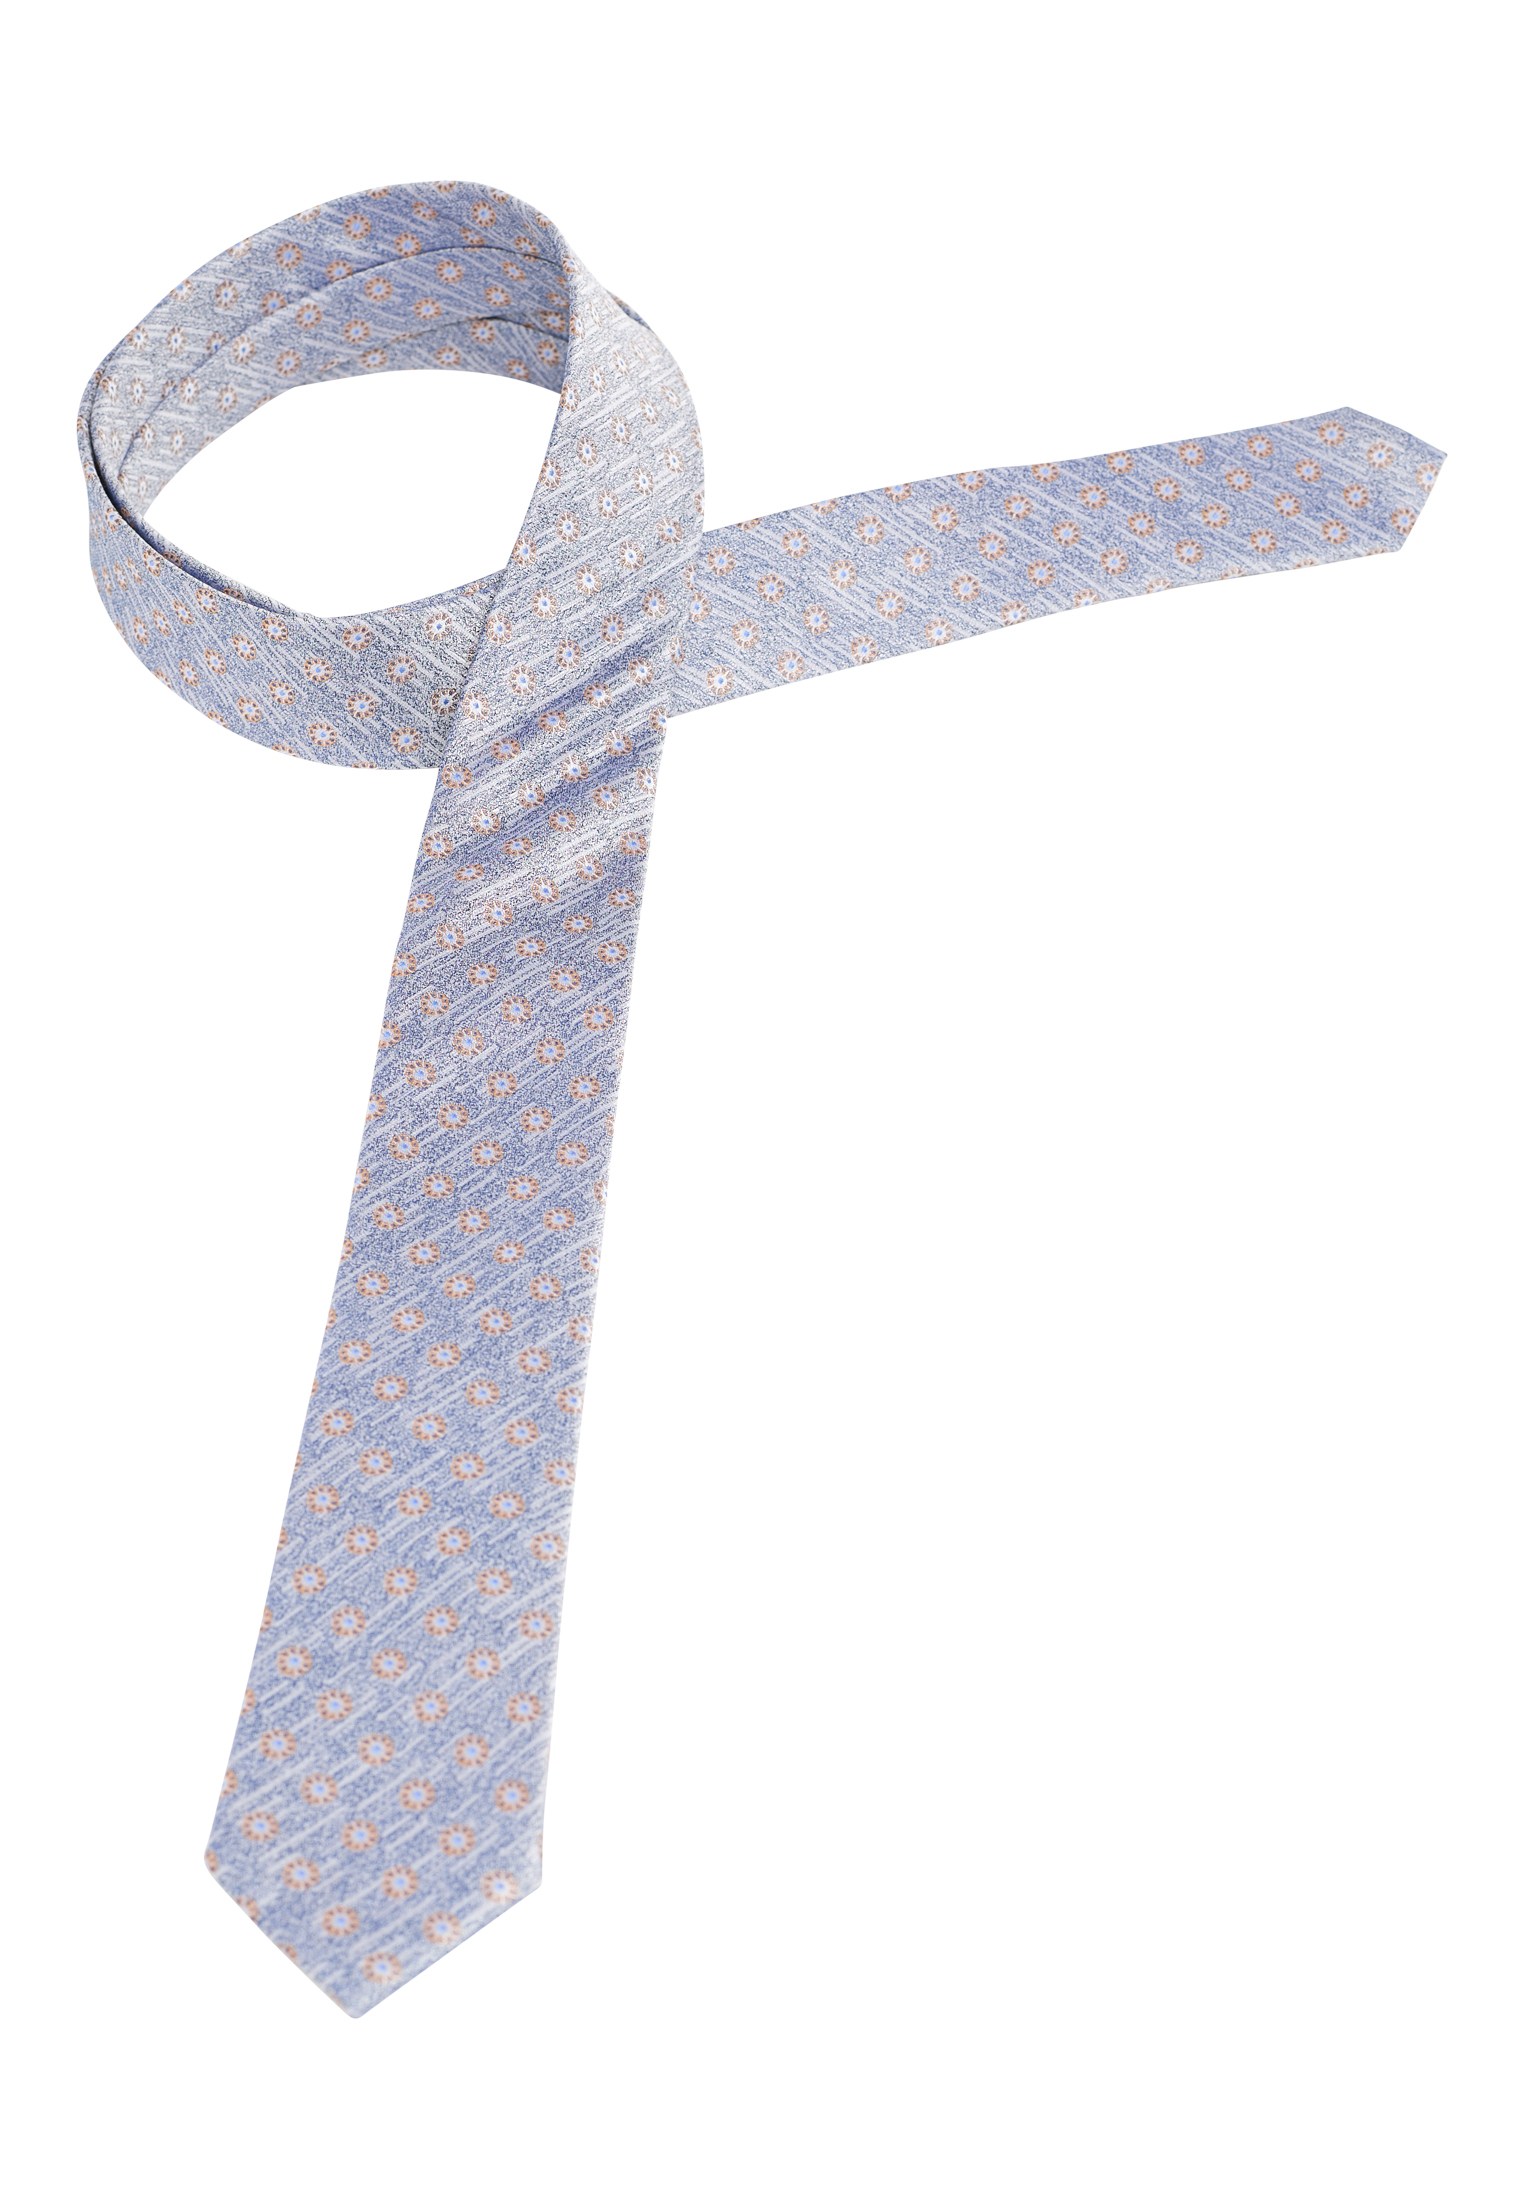 Krawatte in navy/orange gemustert | navy/orange | 142 | 1AC01986-81-93-142 | Breite Krawatten